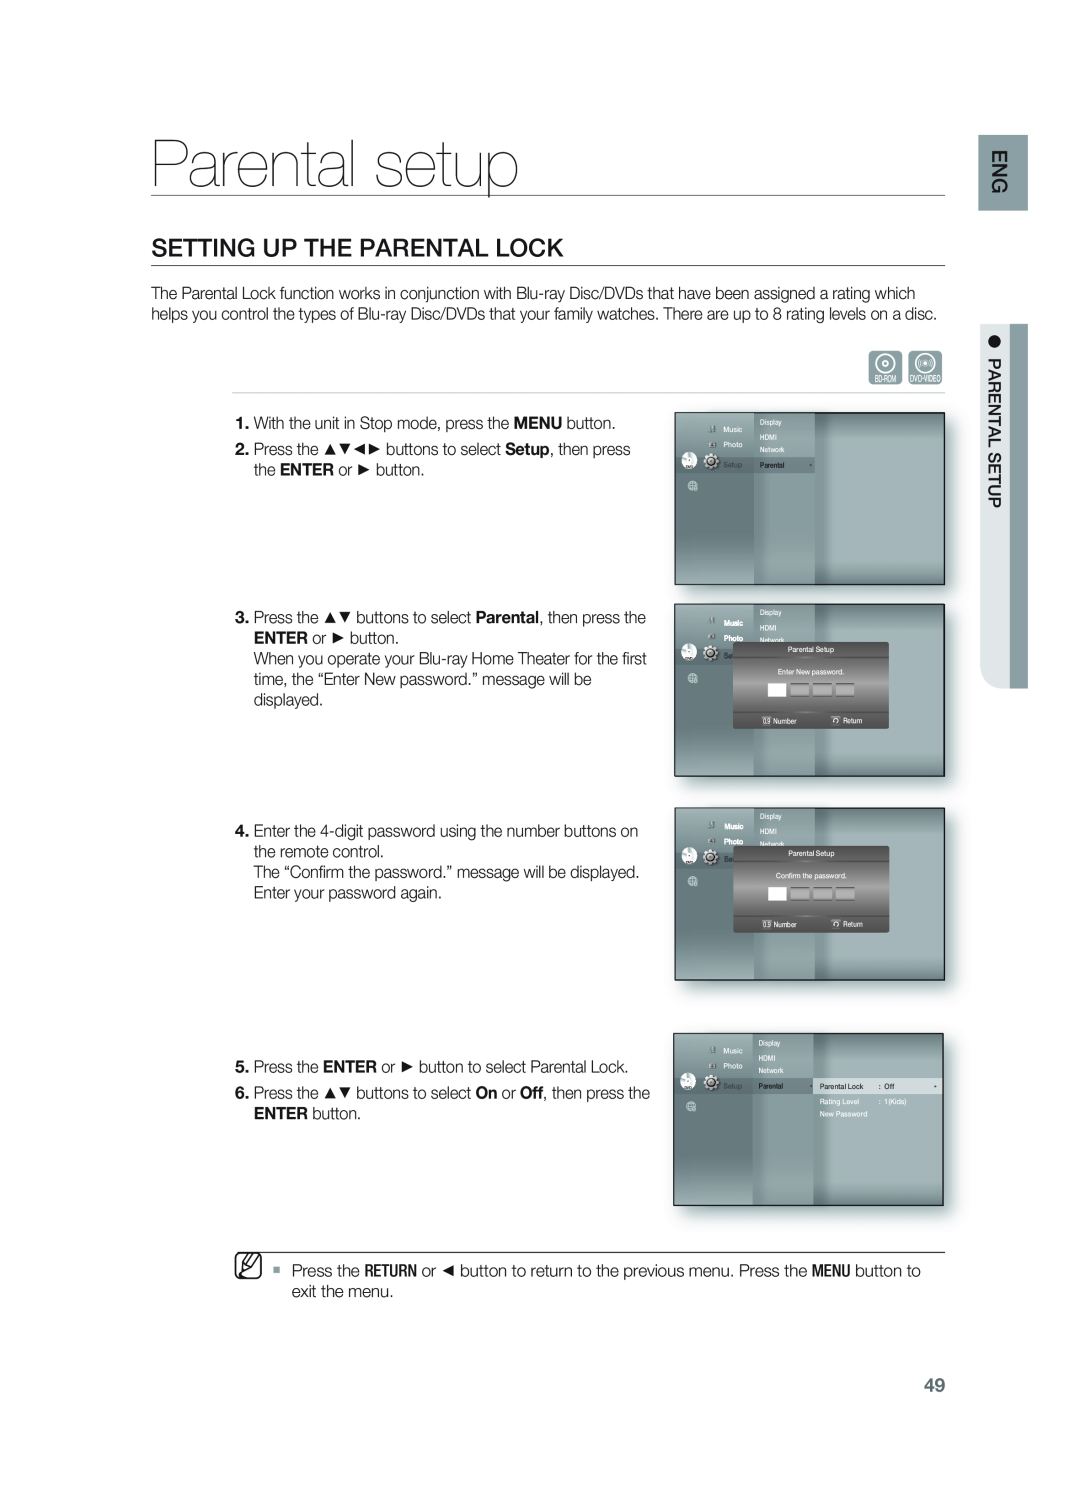 Samsung HT-BD1252, HT-BD1255 user manual Parental setup, Setting Up The Parental Lock, ENTER button 